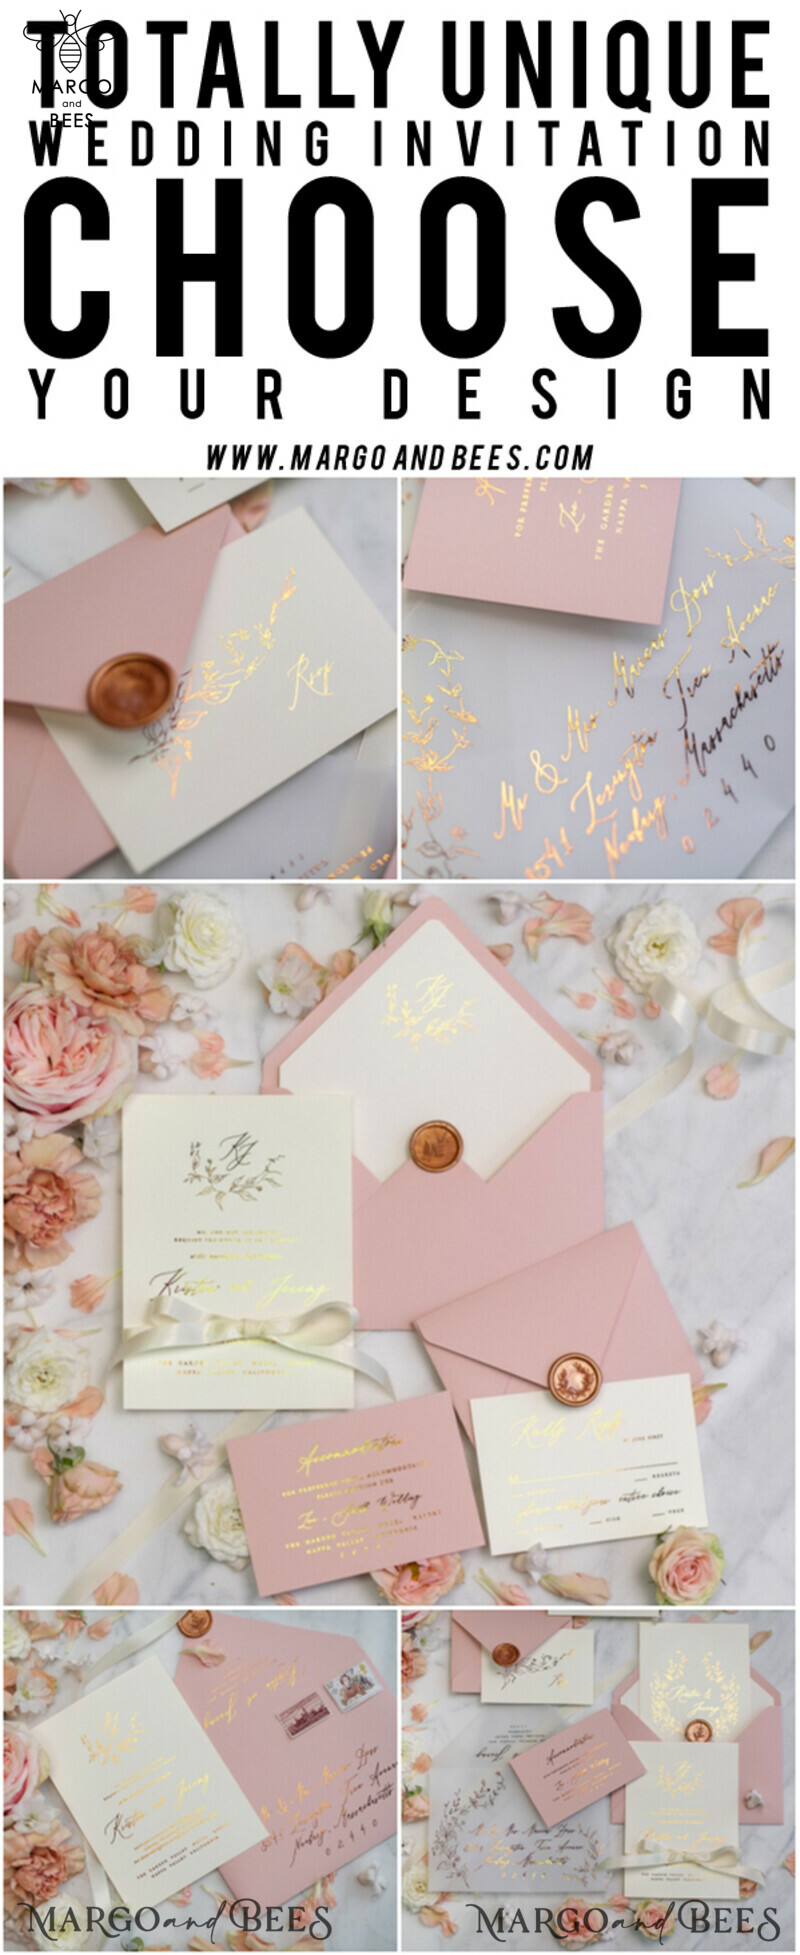 Bespoke Vellum Wedding Invitation Suite: Romantic Blush Pink and Glamour Gold Foil for Elegant Golden Wedding Invites-40